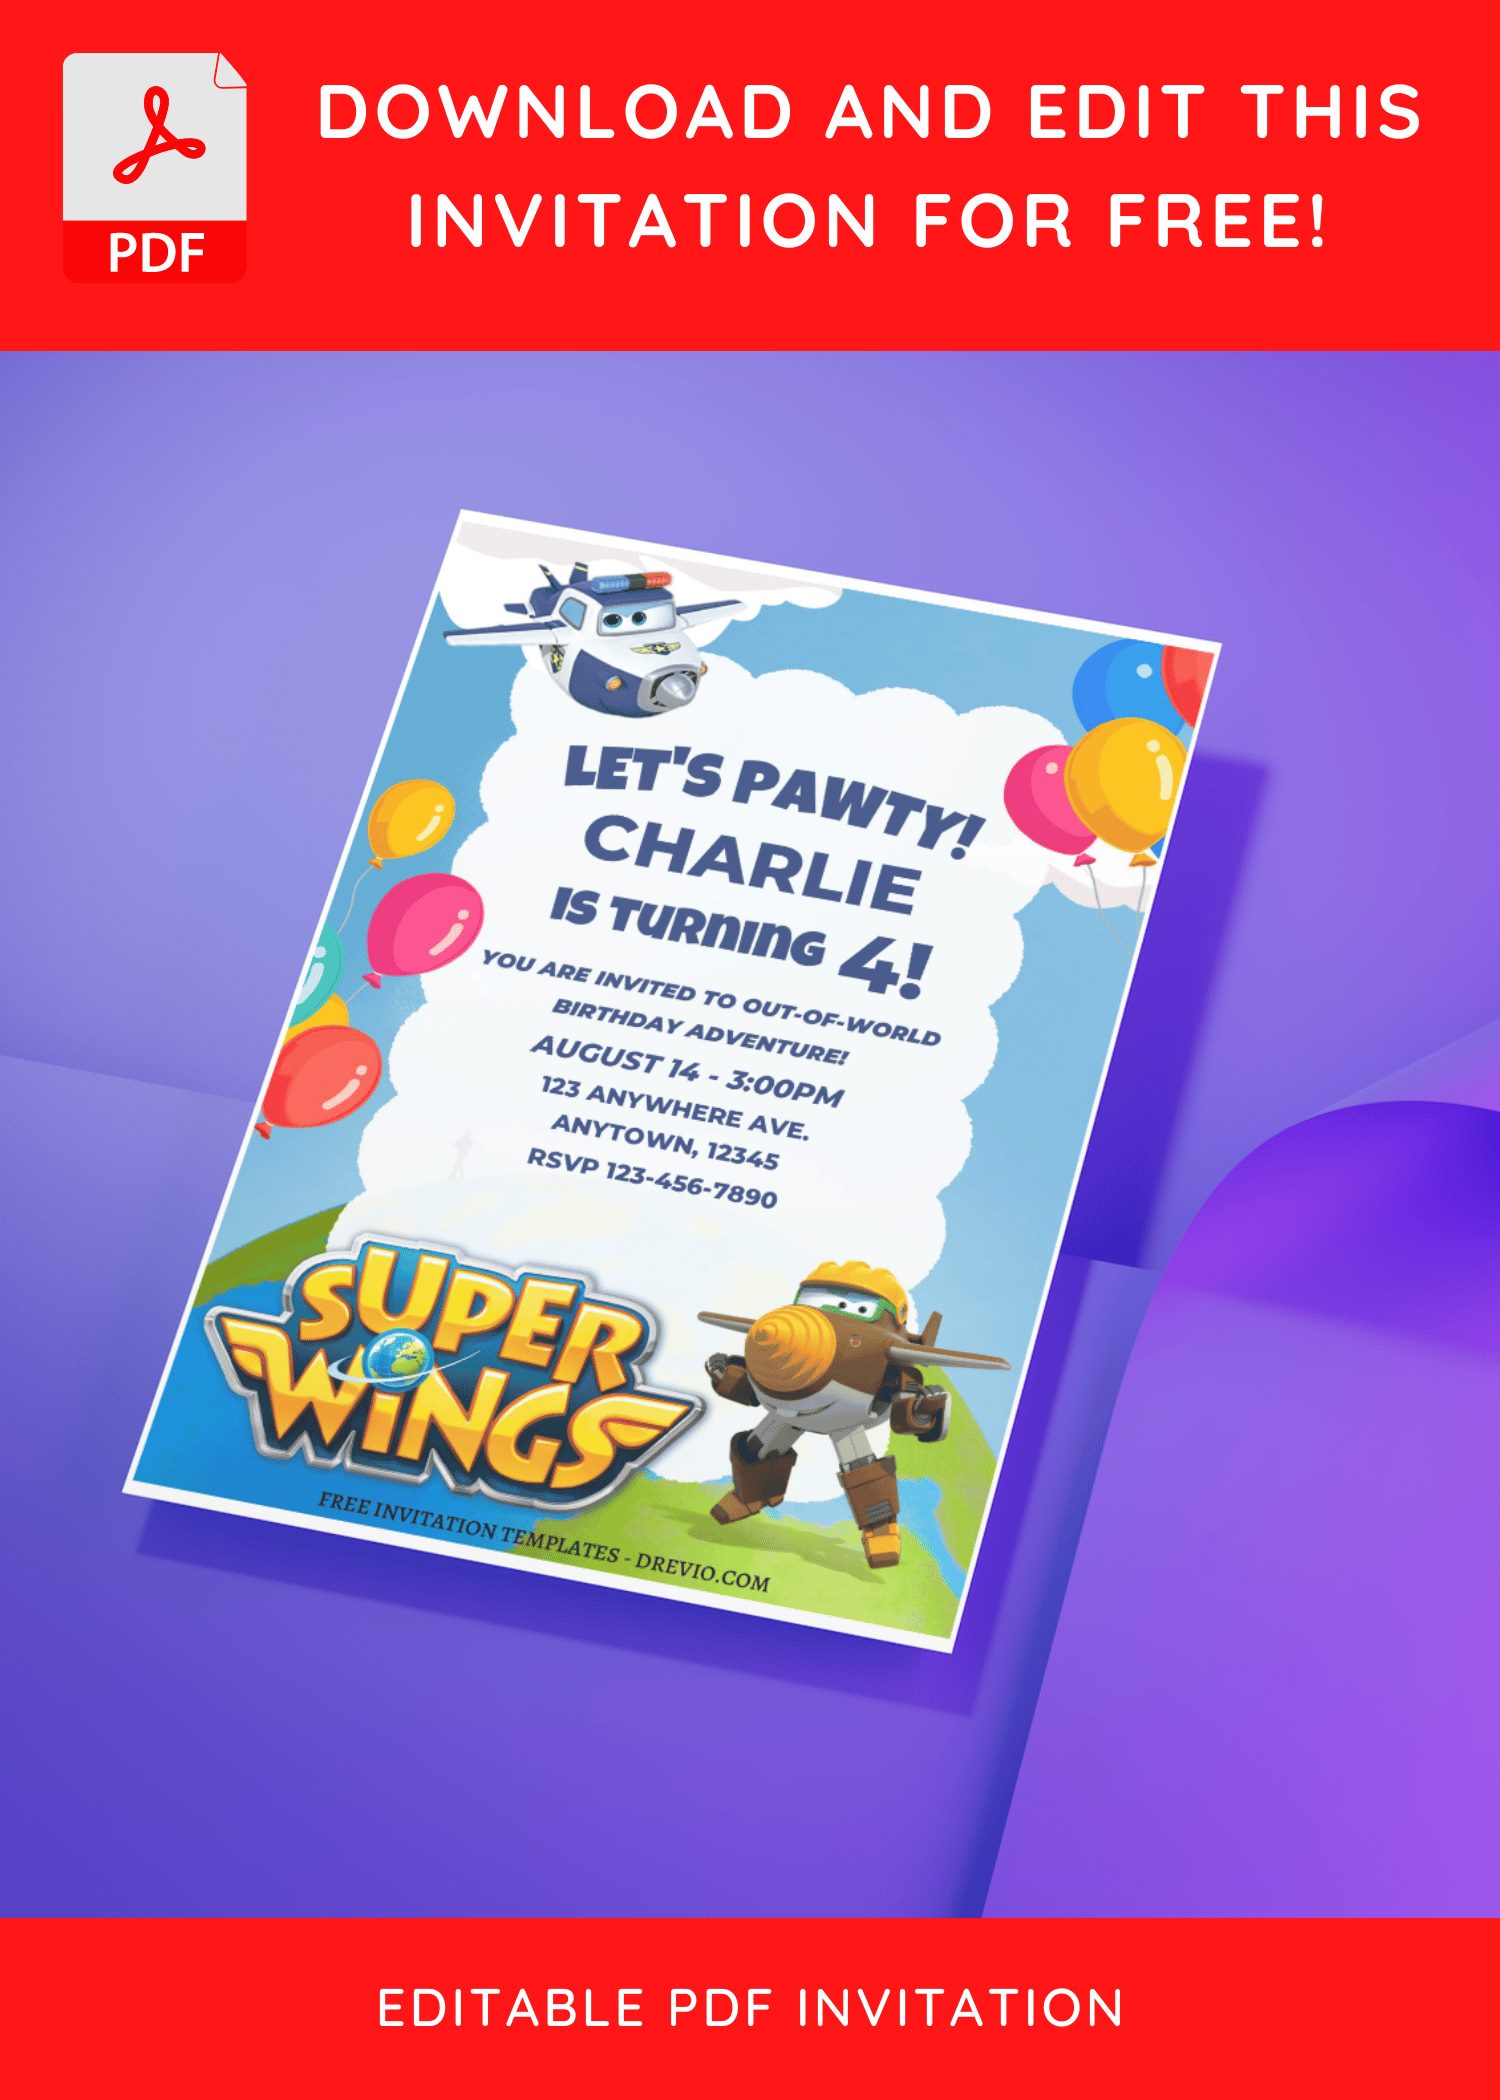 22+ Lilo & Stitch Canva Birthday Invitation Templates  Download Hundreds  FREE PRINTABLE Birthday Invitation Templates